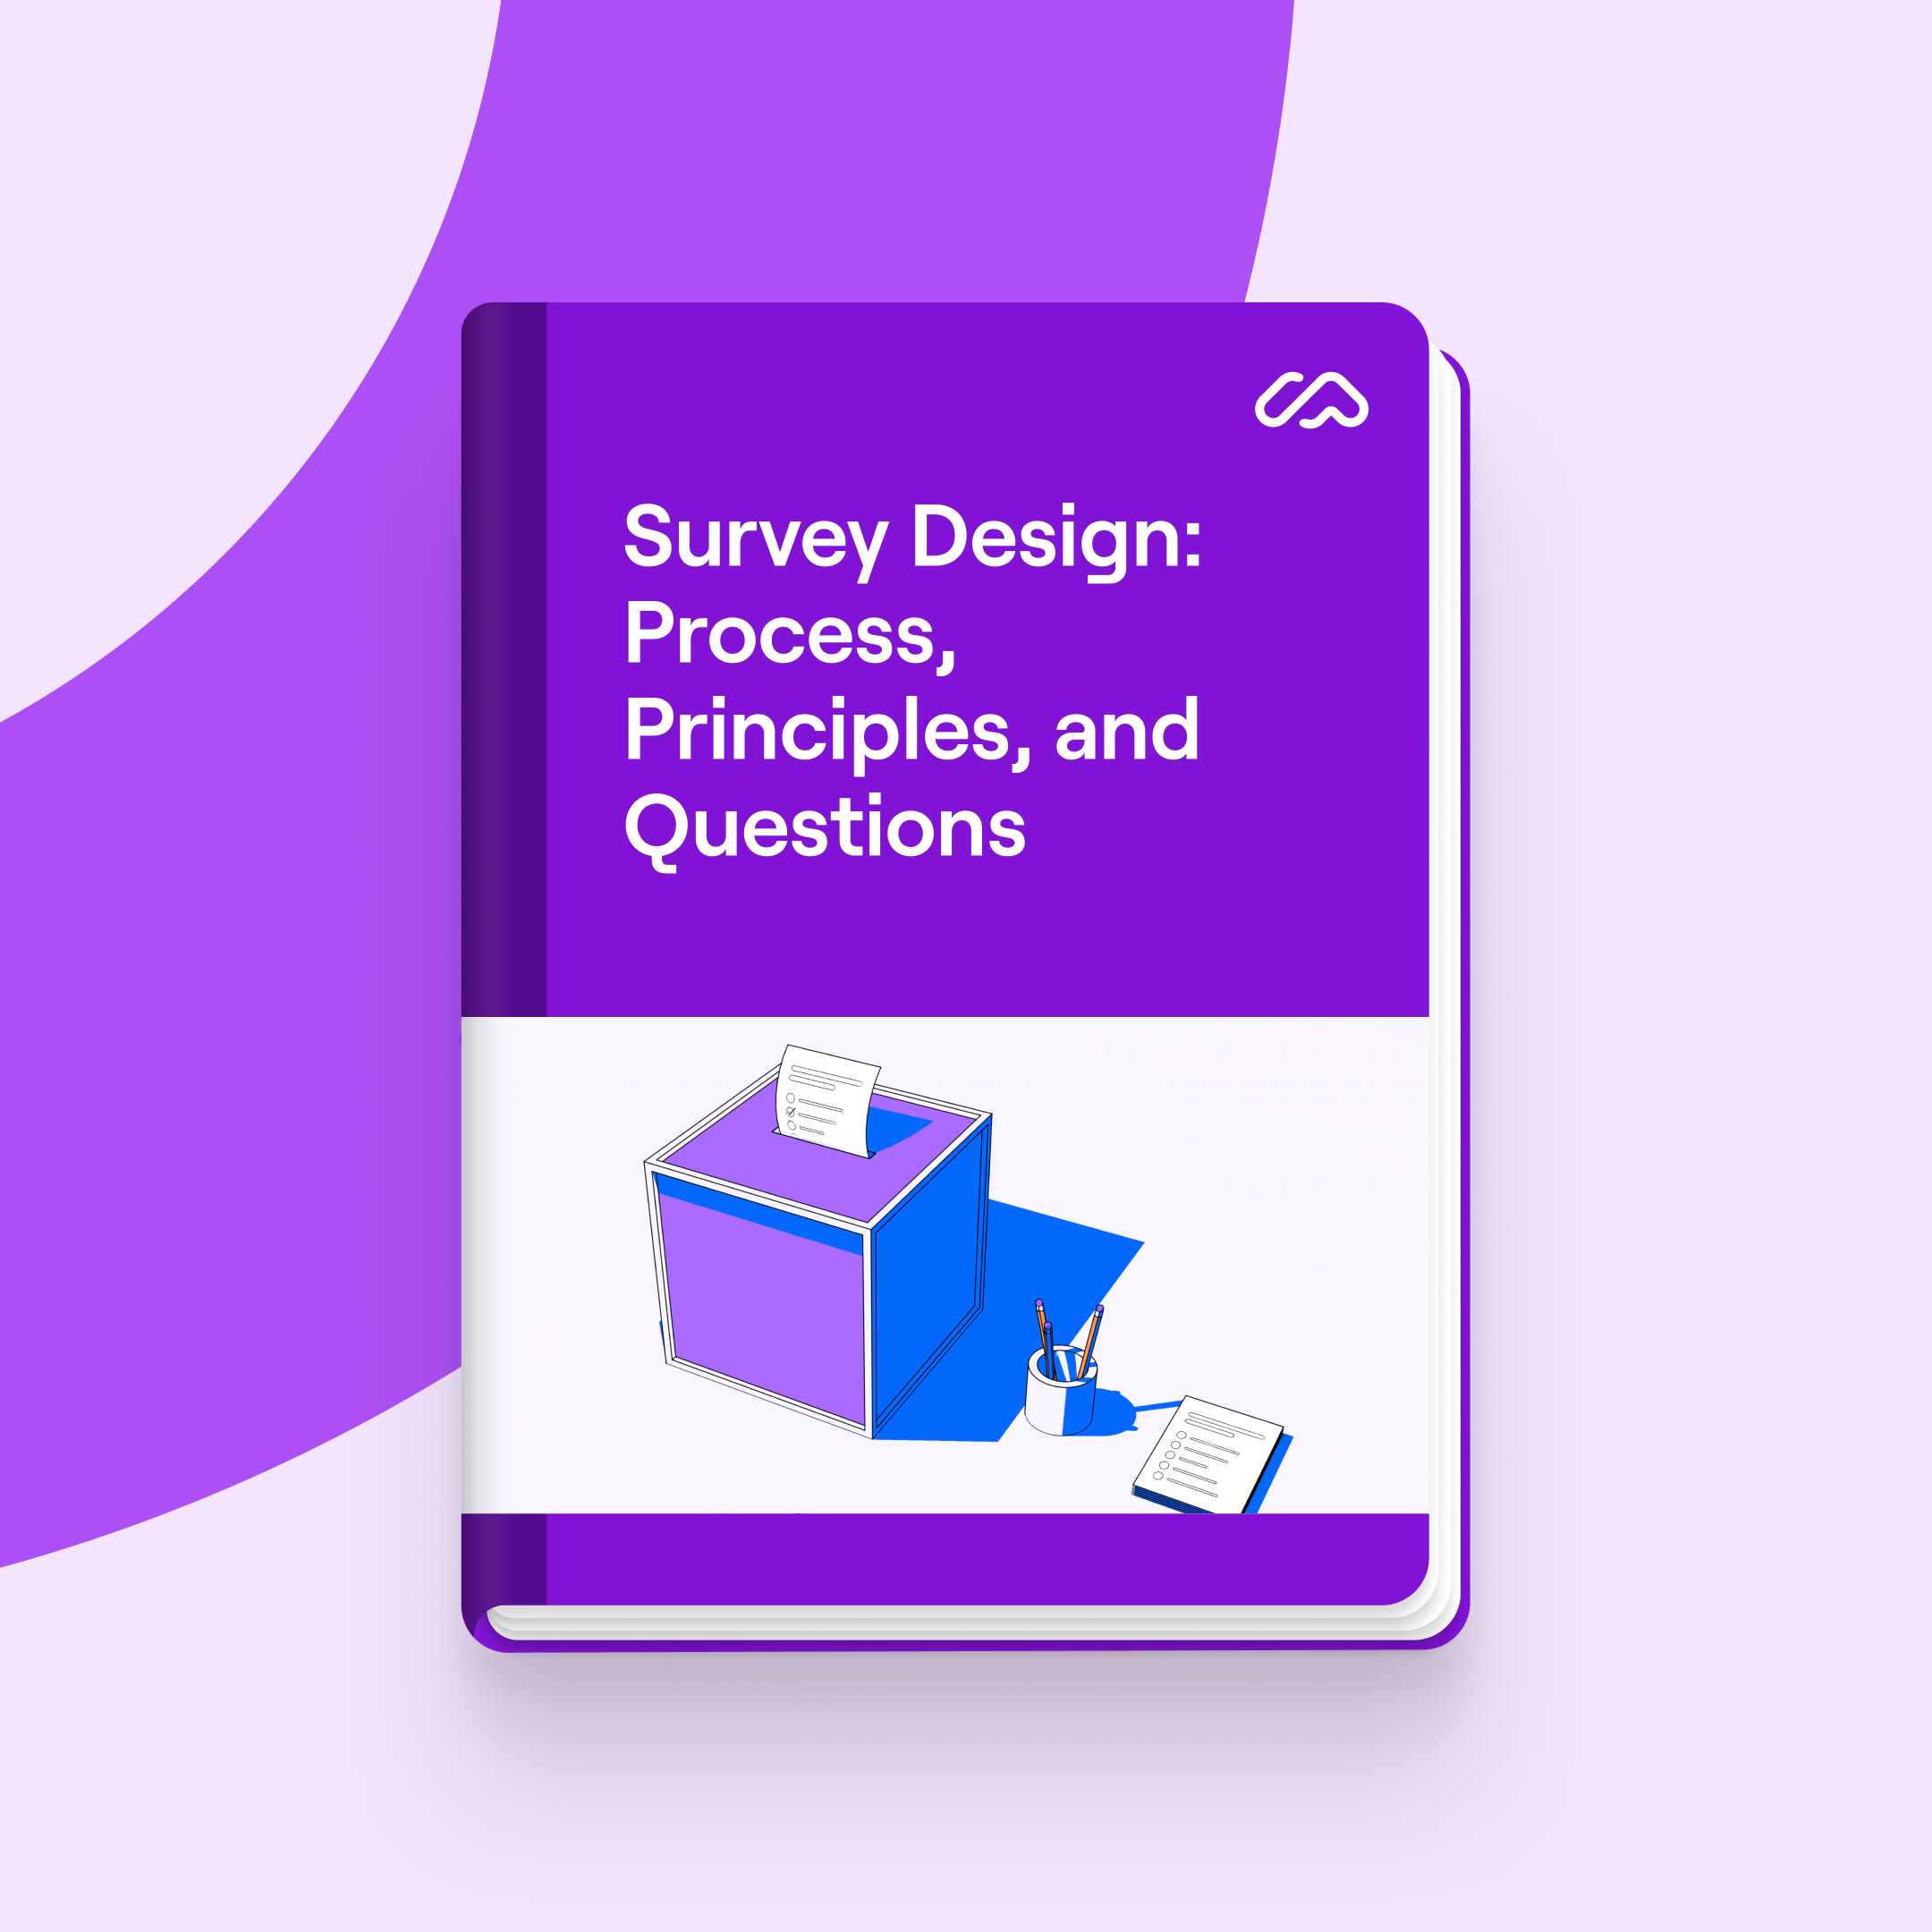 Survey Design: Process, Principles, and Questions